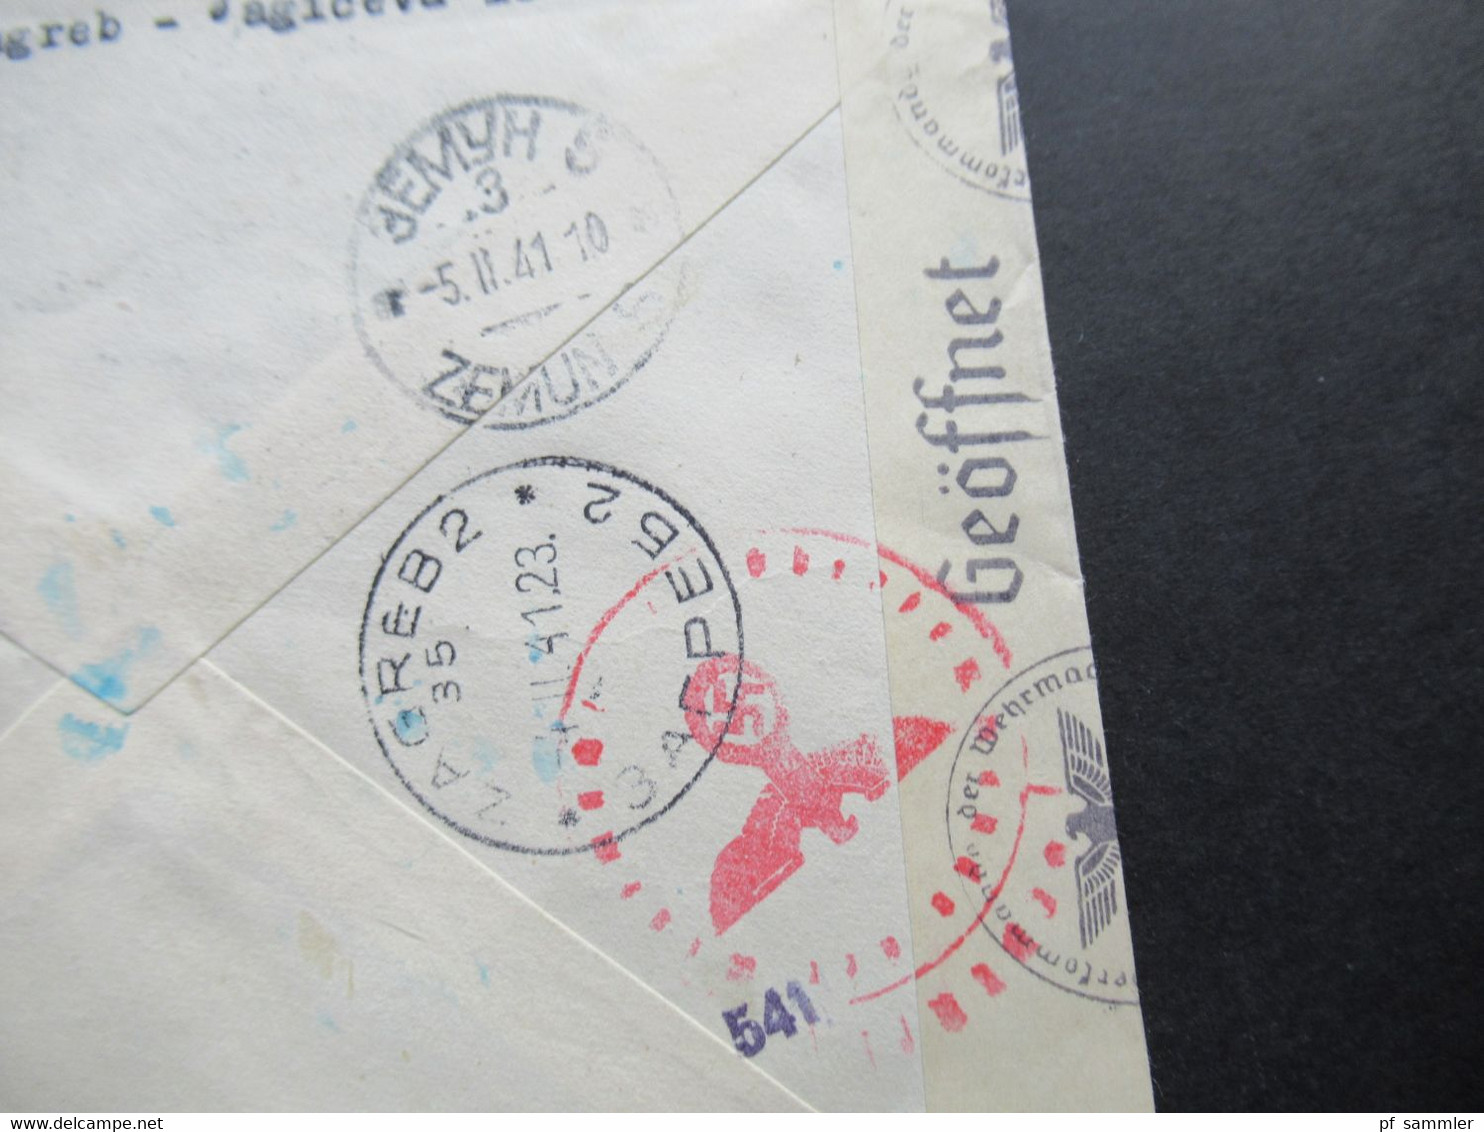 Jugoslawien 1941 Zensurbeleg / OKW Zensur / Mehrfachzensur Luftpost Zagreb An Westphalen & Co. In Hamburg - Briefe U. Dokumente